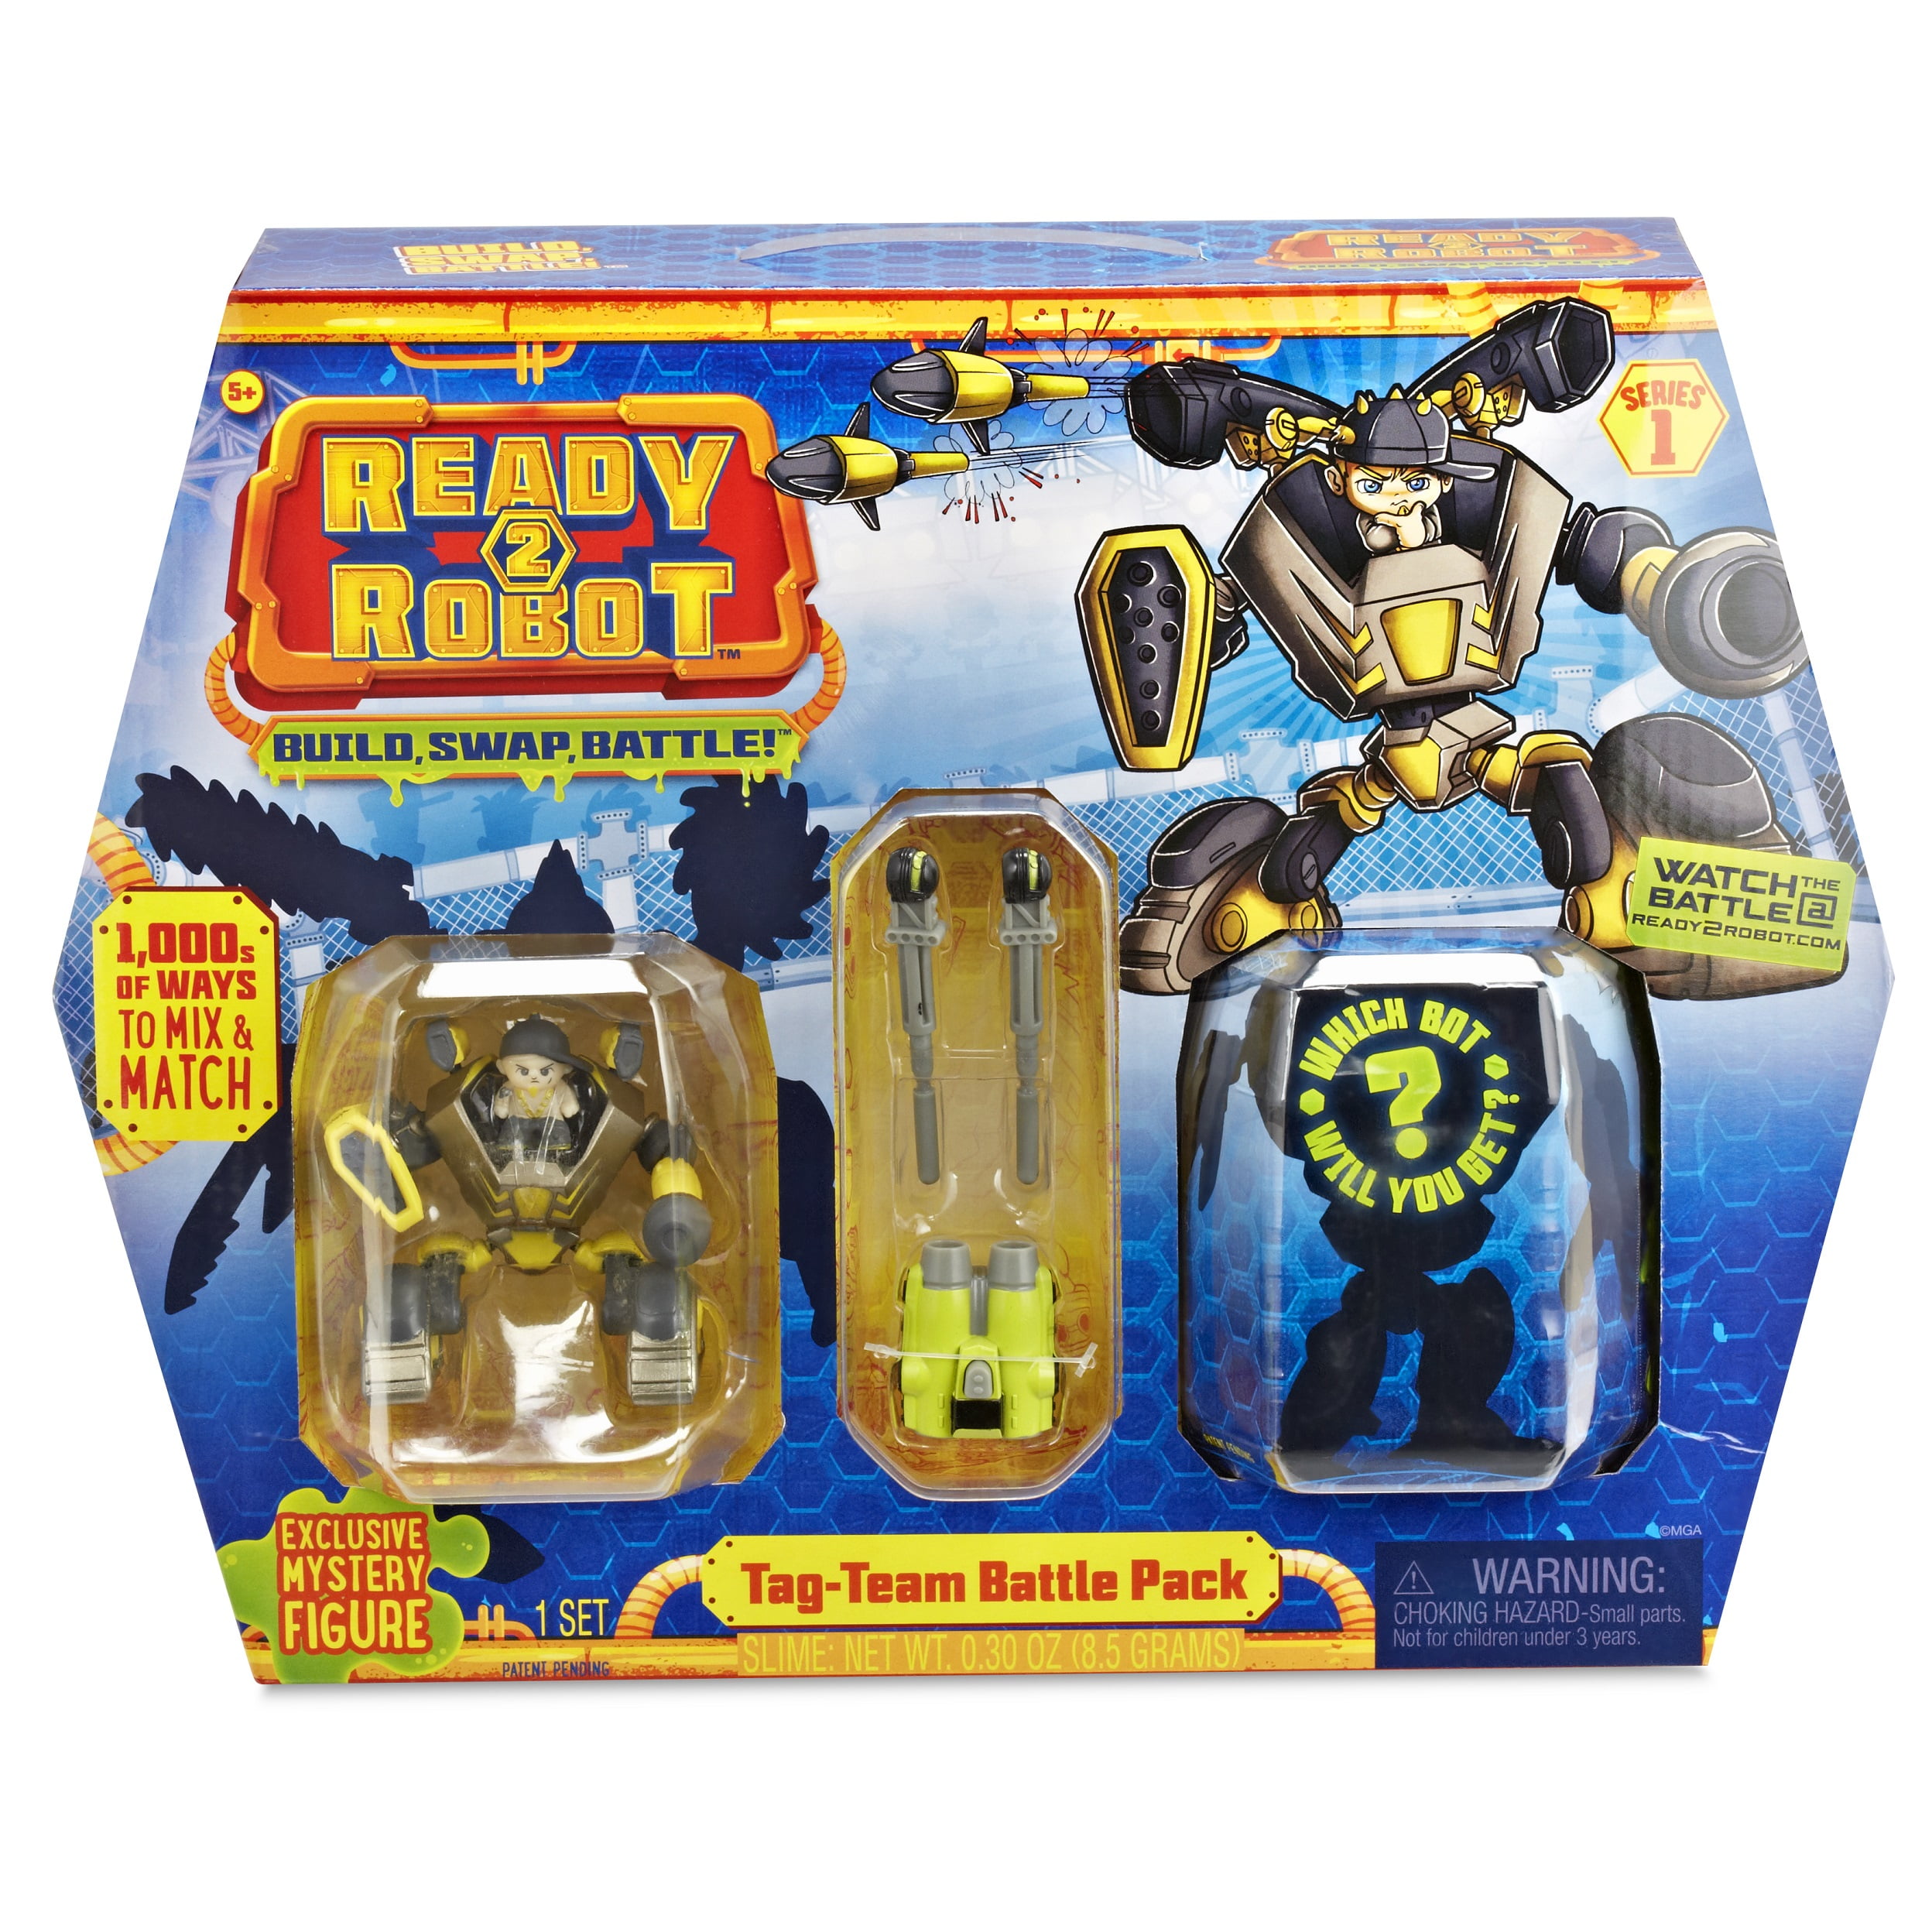 Ready 2 Robot Survivor Battle Pack Series 1 W Mystery Figure for sale online 